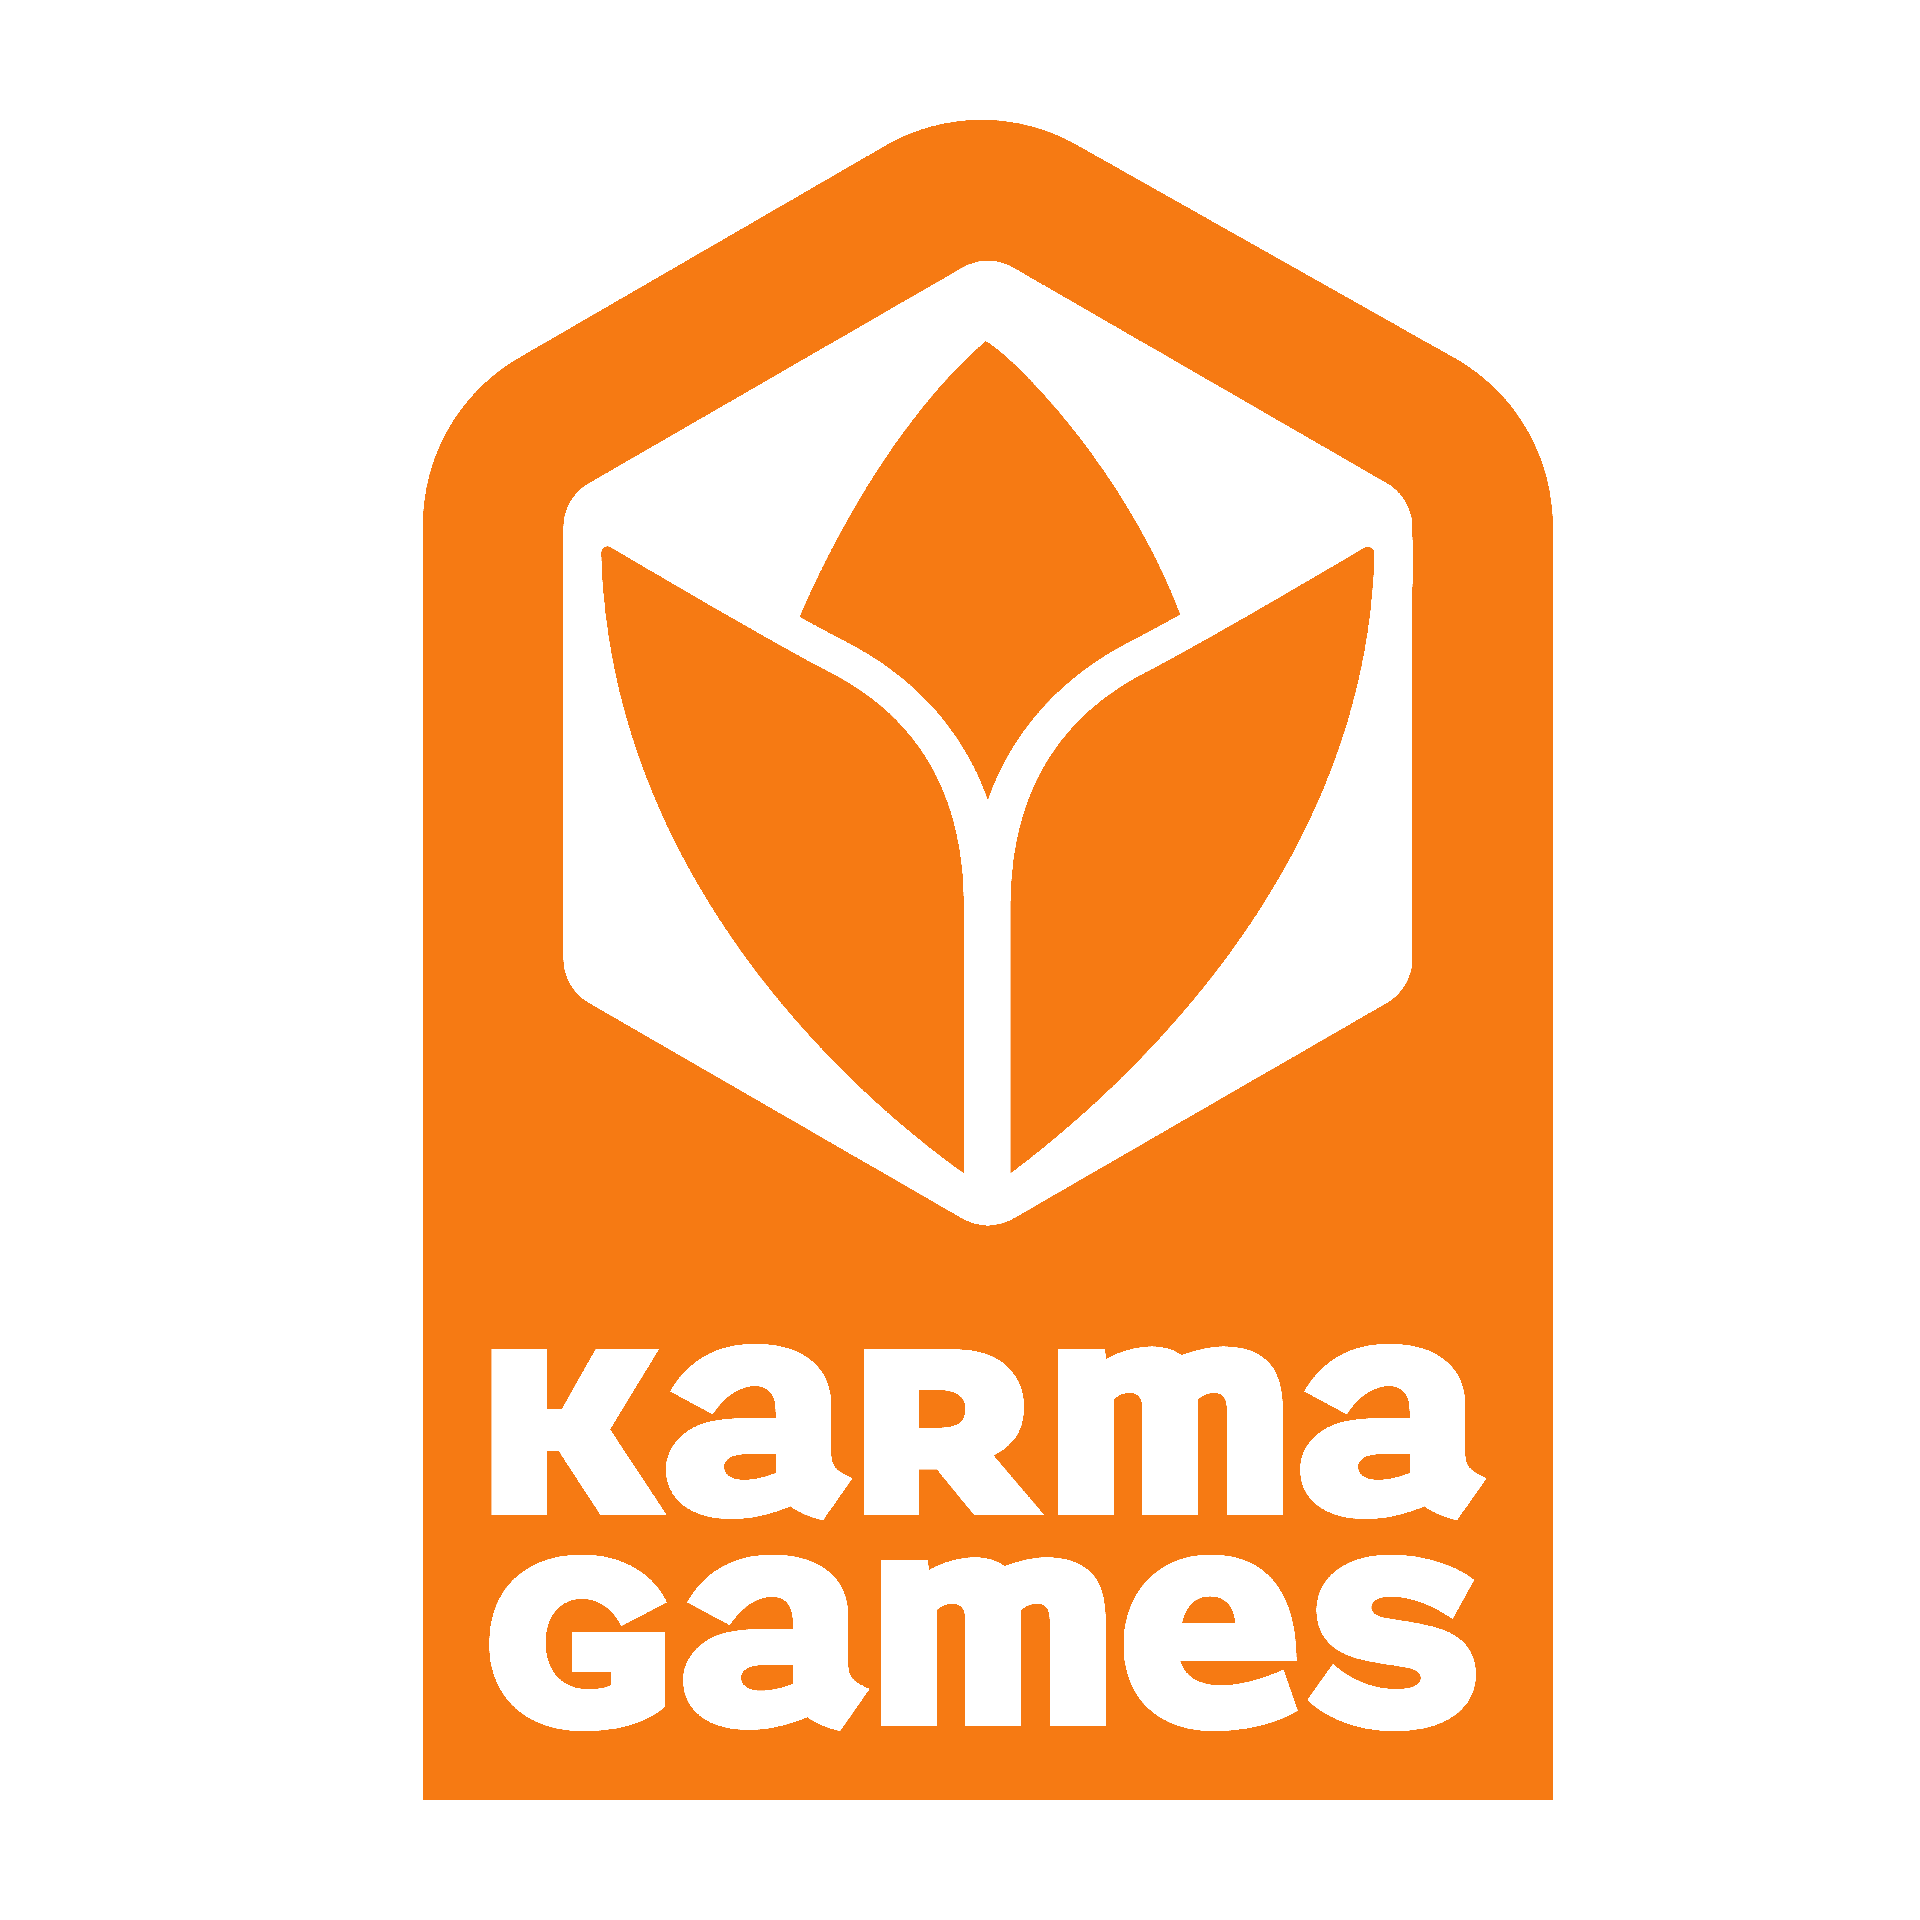 Brand: Karma Games